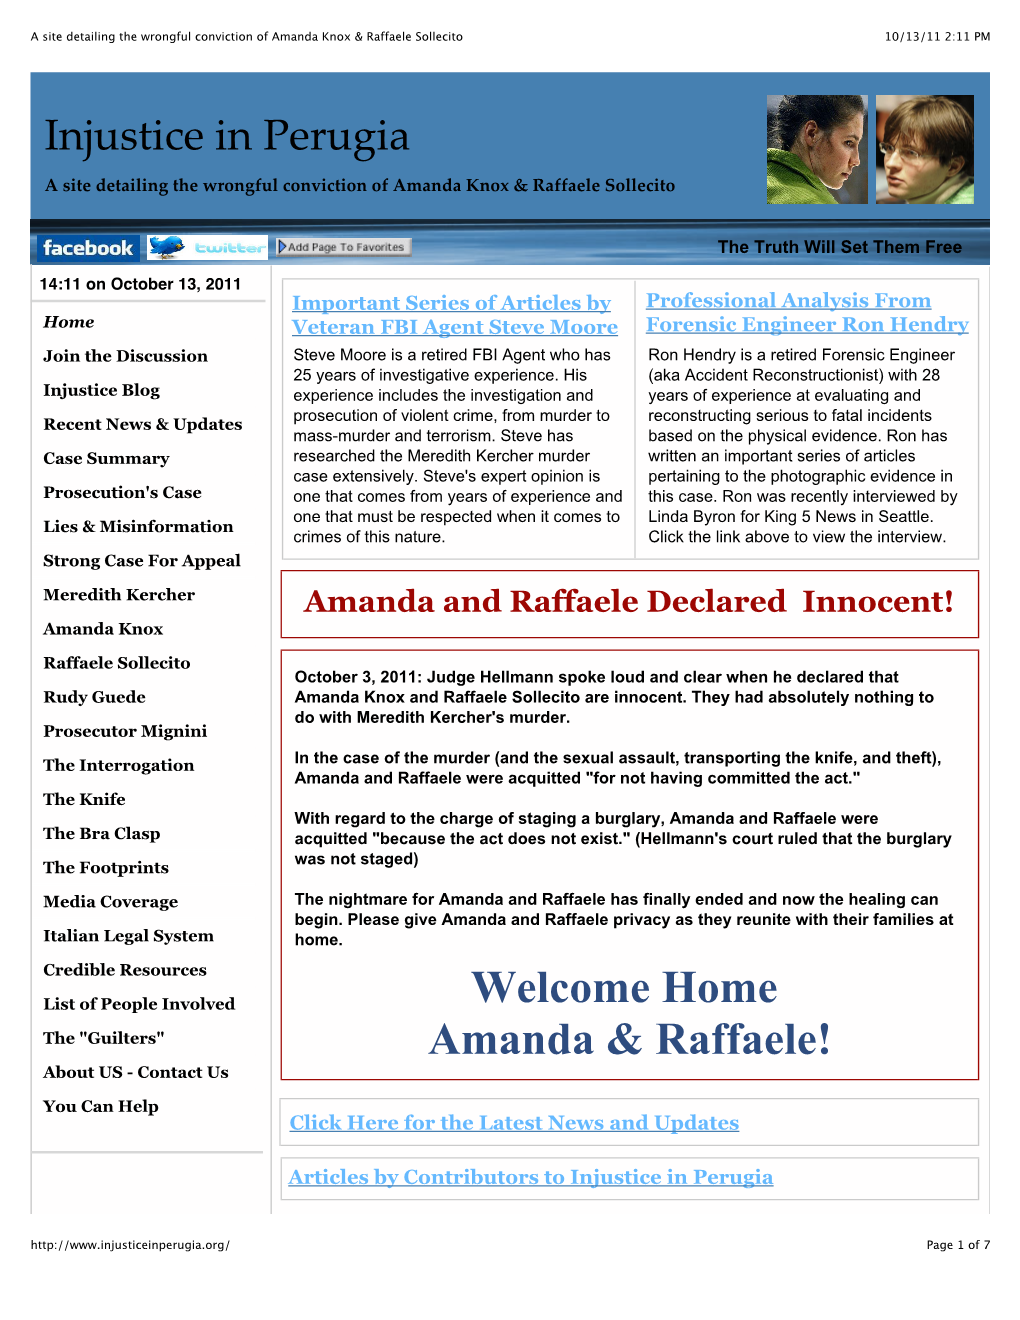 A Site Detailing the Wrongful Conviction of Amanda Knox & Raffaele Sollecito